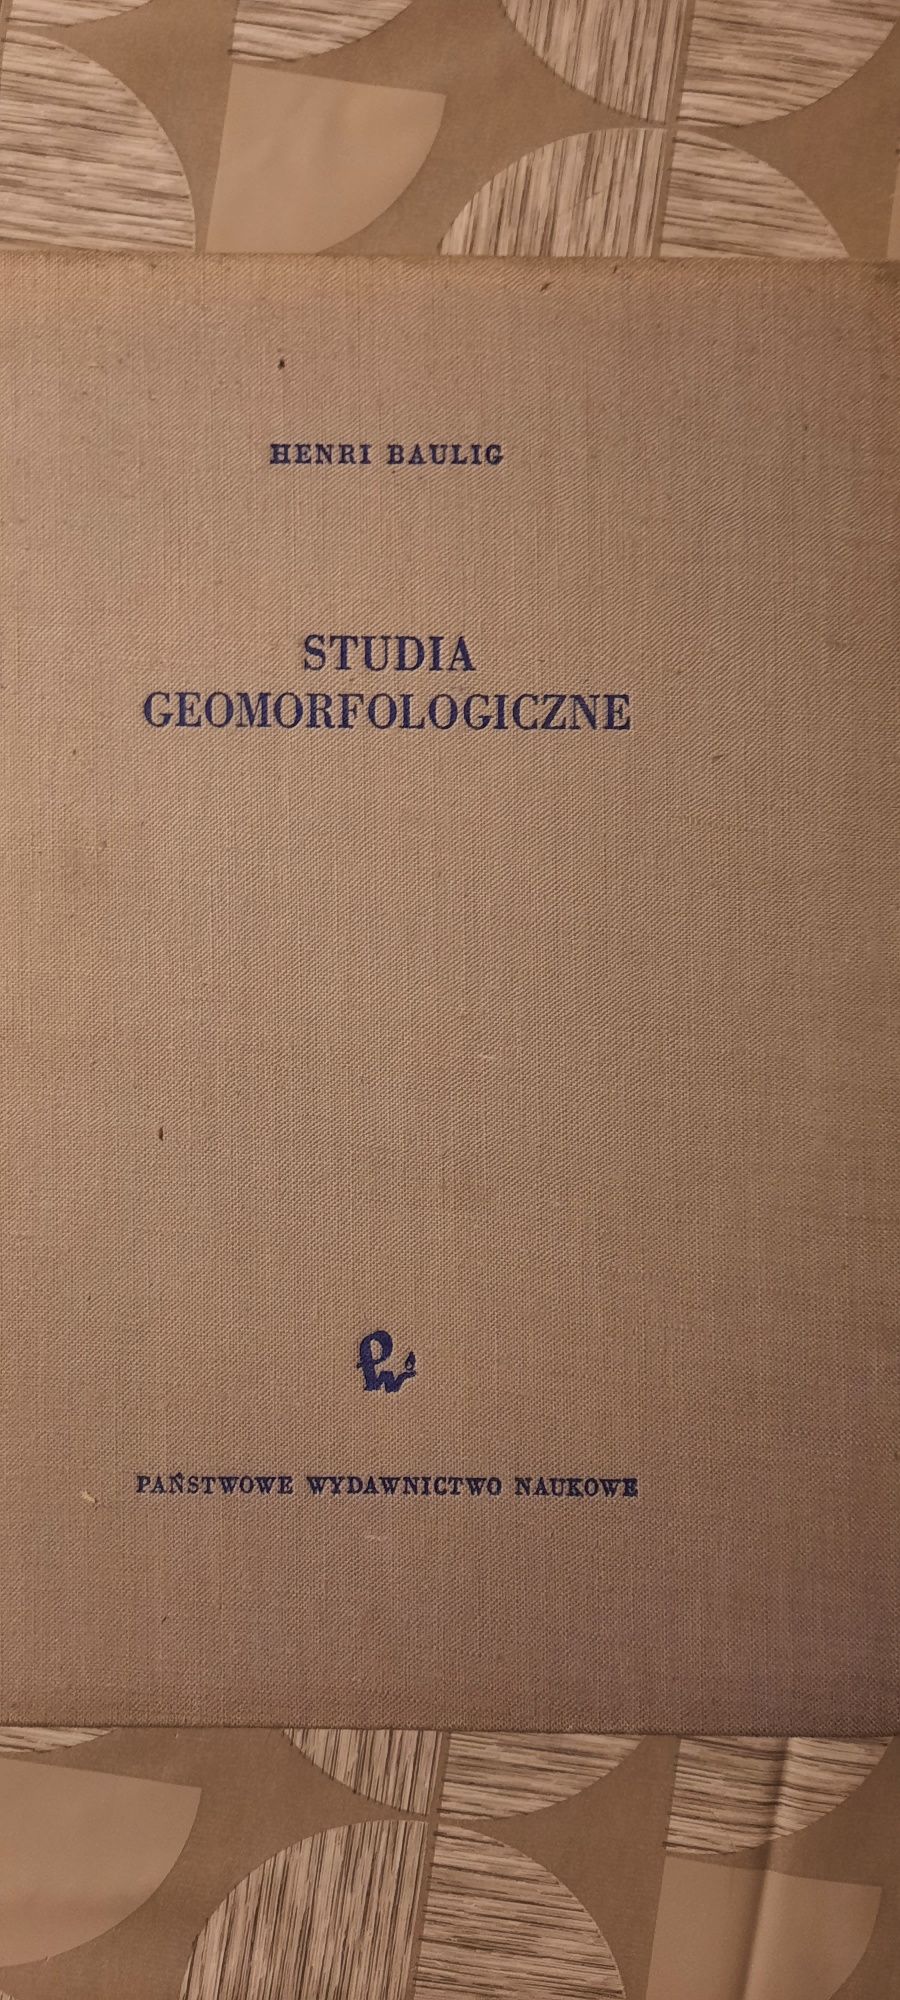 Studia geomorfologiczne. Henri Baulig.